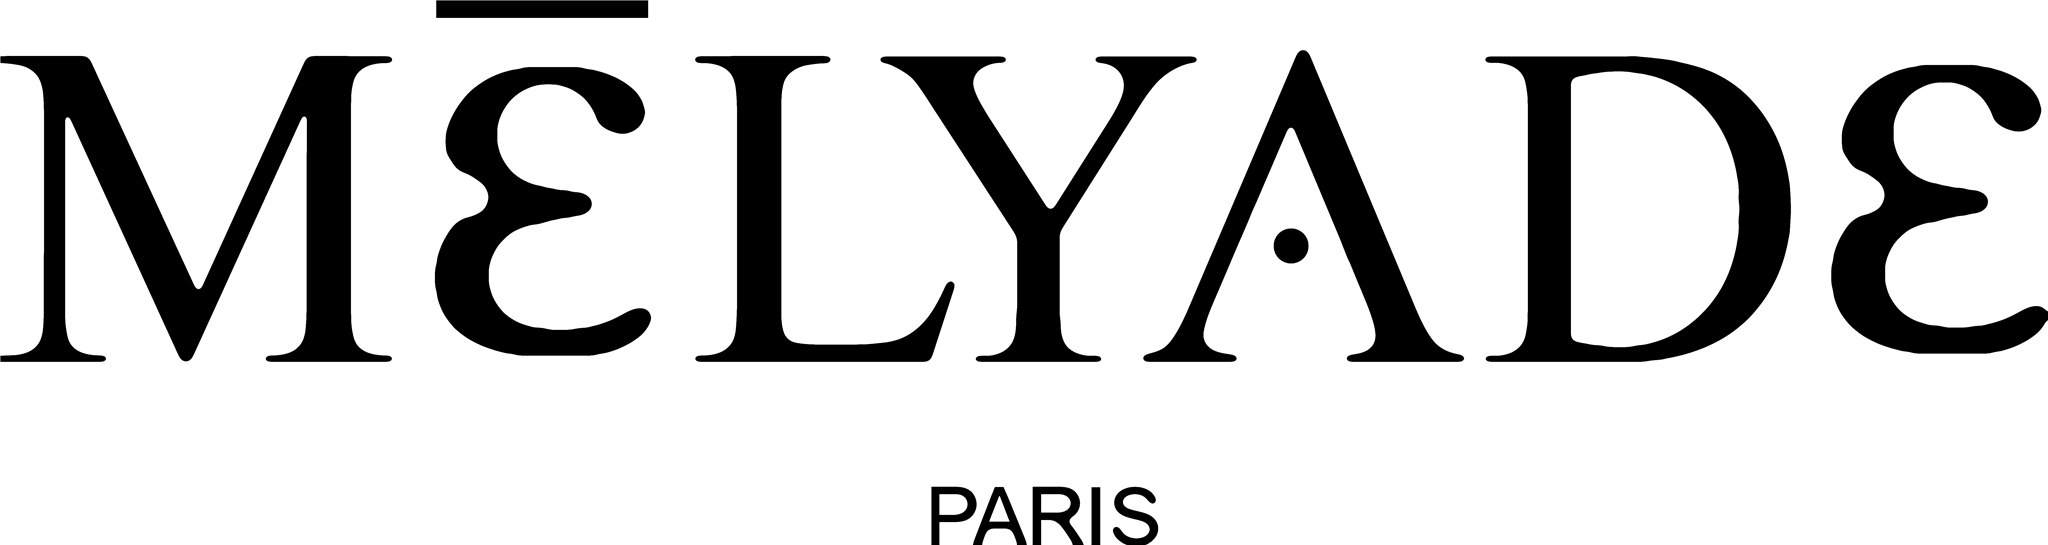 Mélyade logo